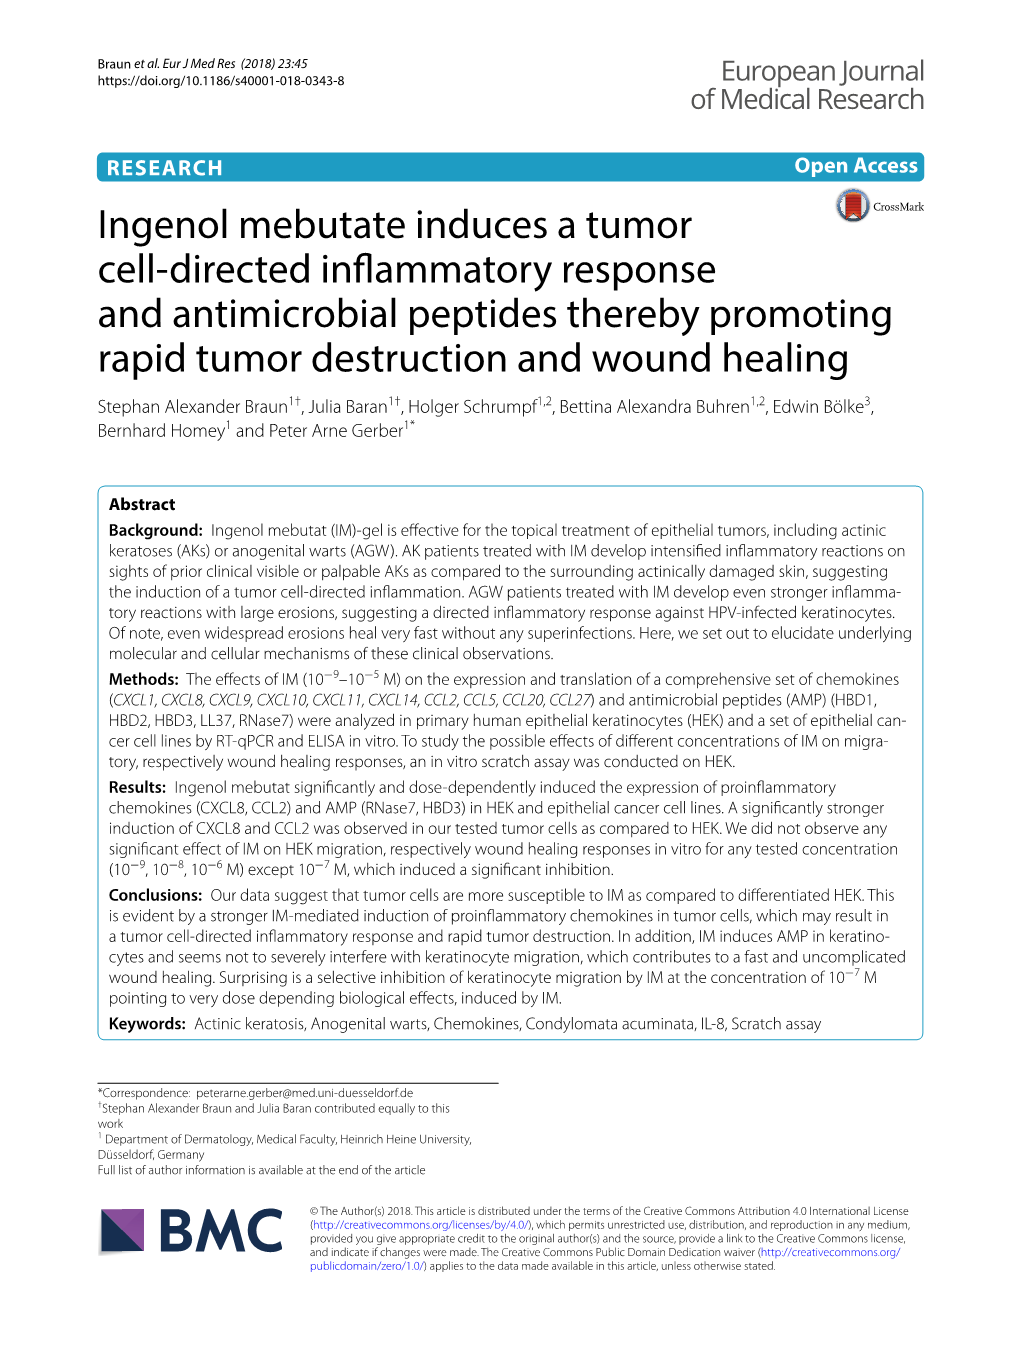 Ingenol Mebutate Induces a Tumor Cell-Directed Inflammatory Response